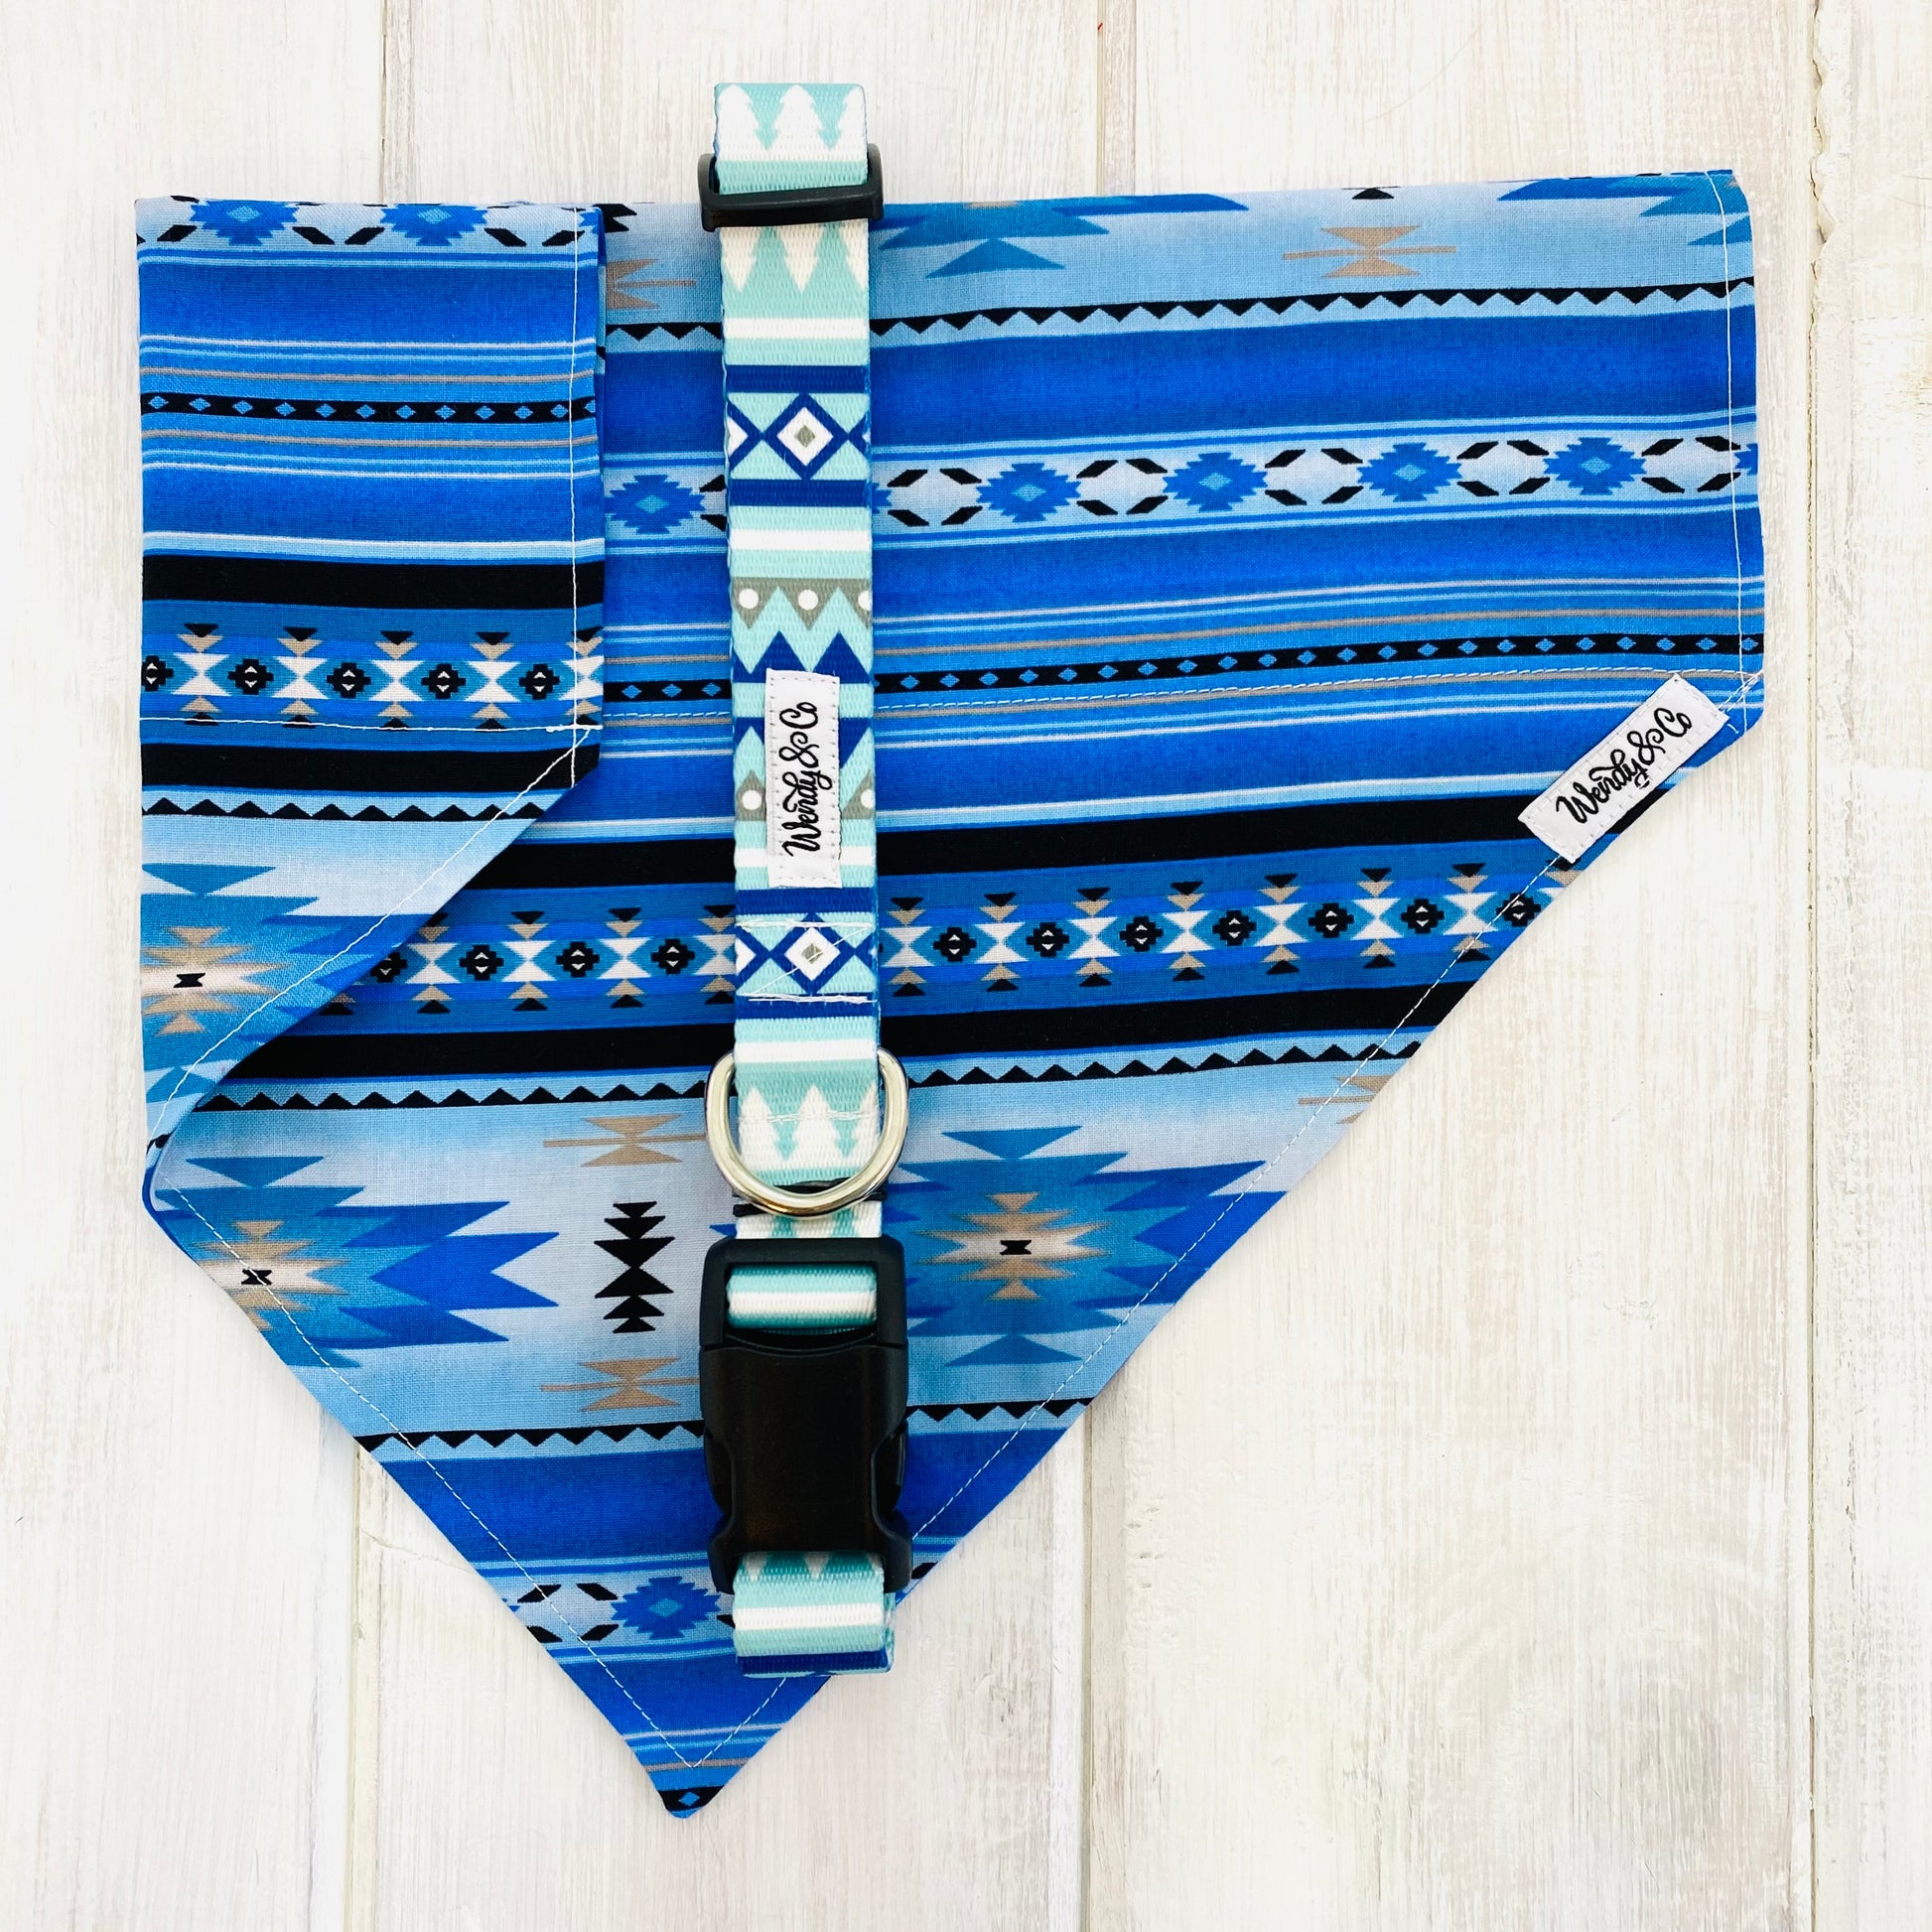 Dog bandana in Tribal design in shades of blue.